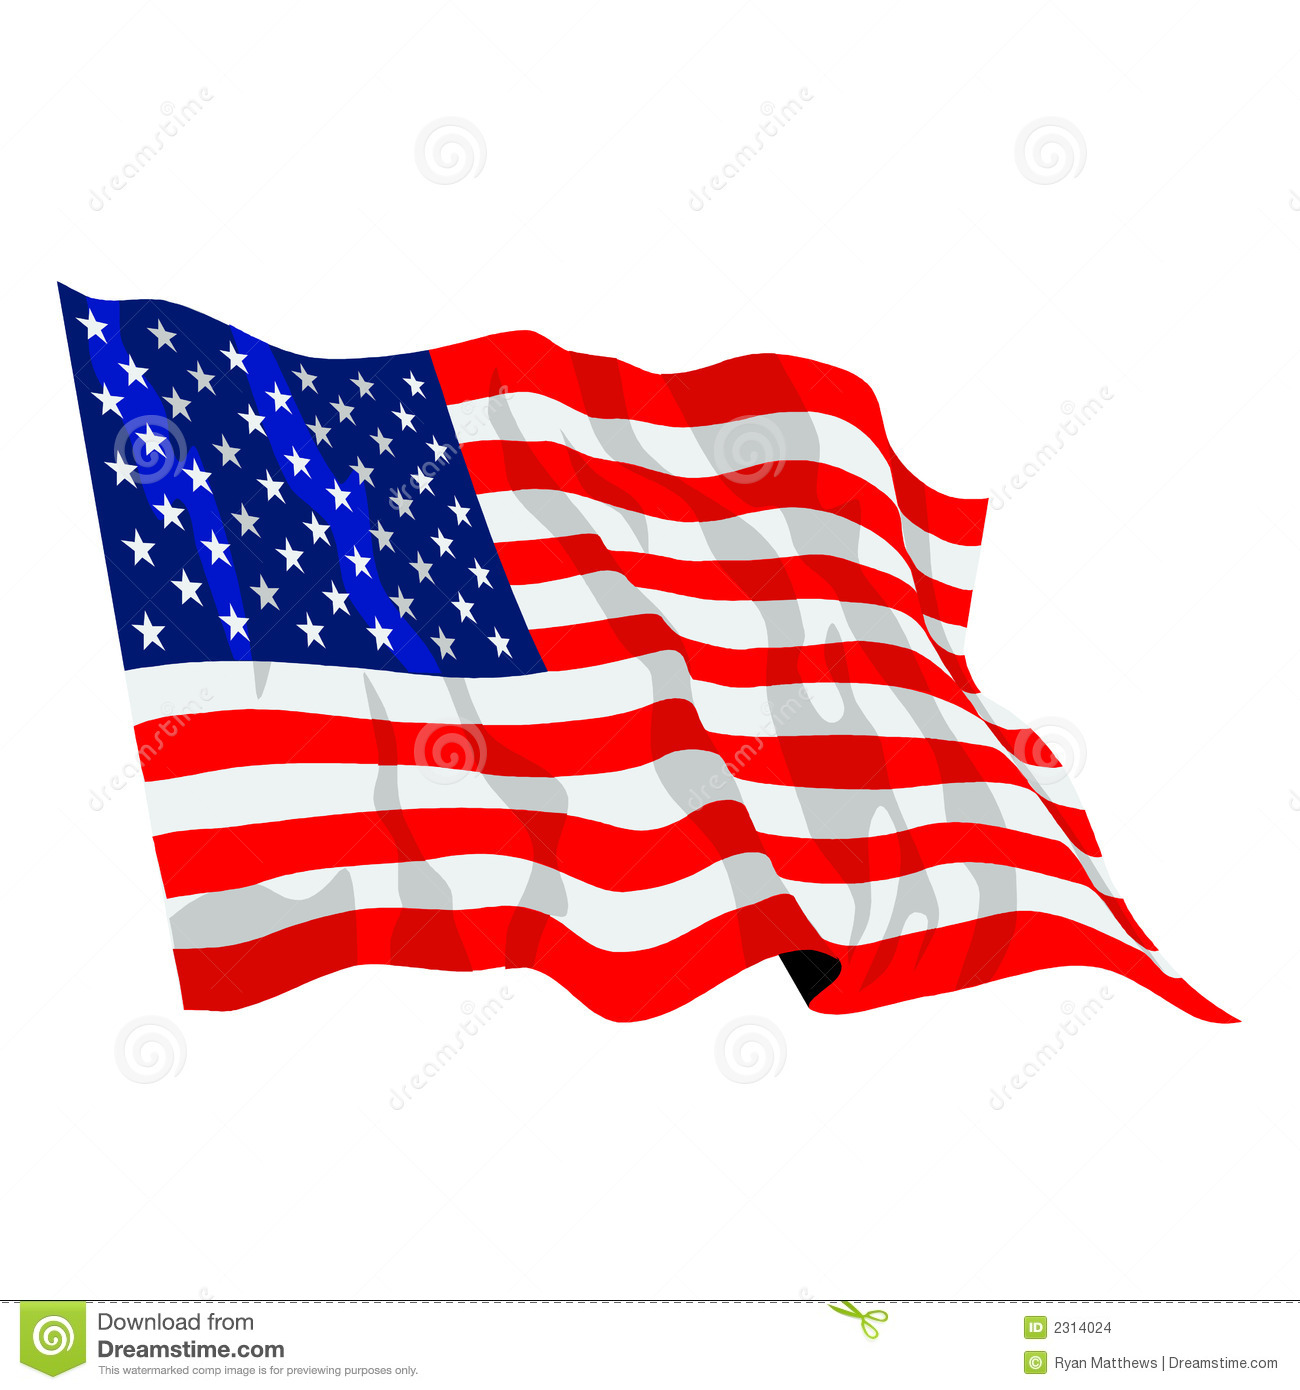 American Flag Illustration Stock Images   Image  2314024